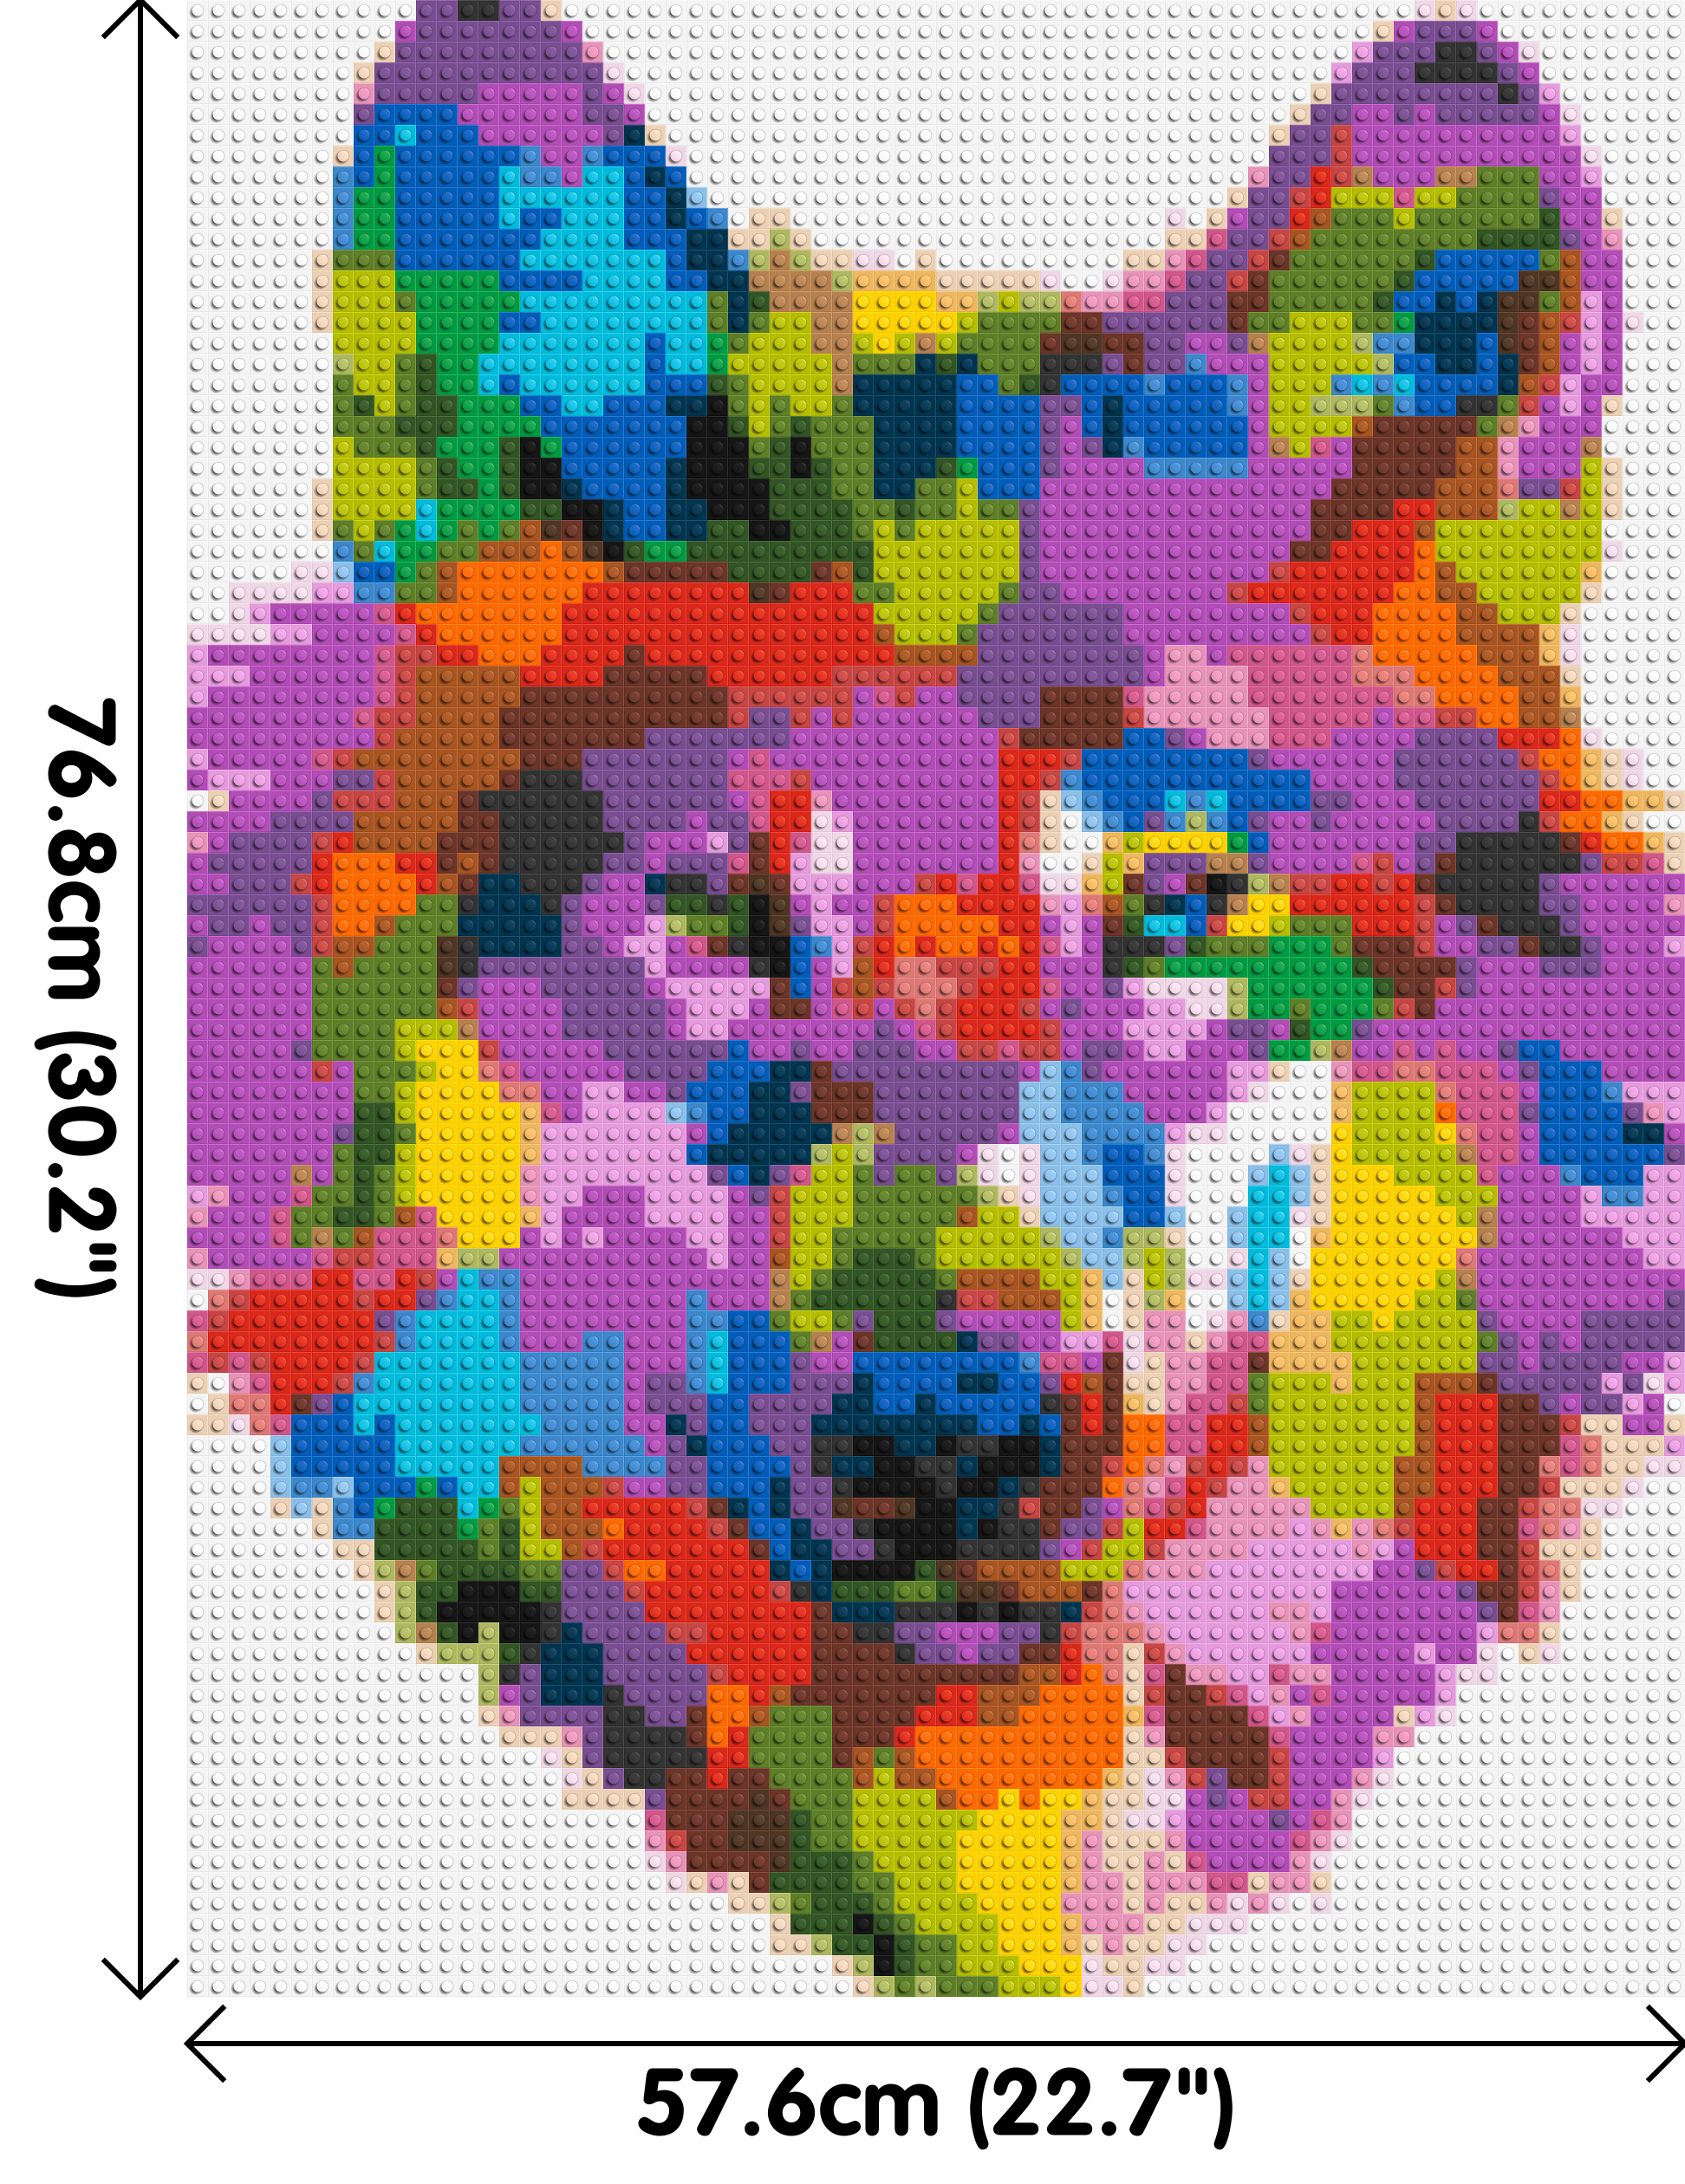 Wolf Colourful Pop Art - Brick Art Mosaic Kit 3x4 dimensions